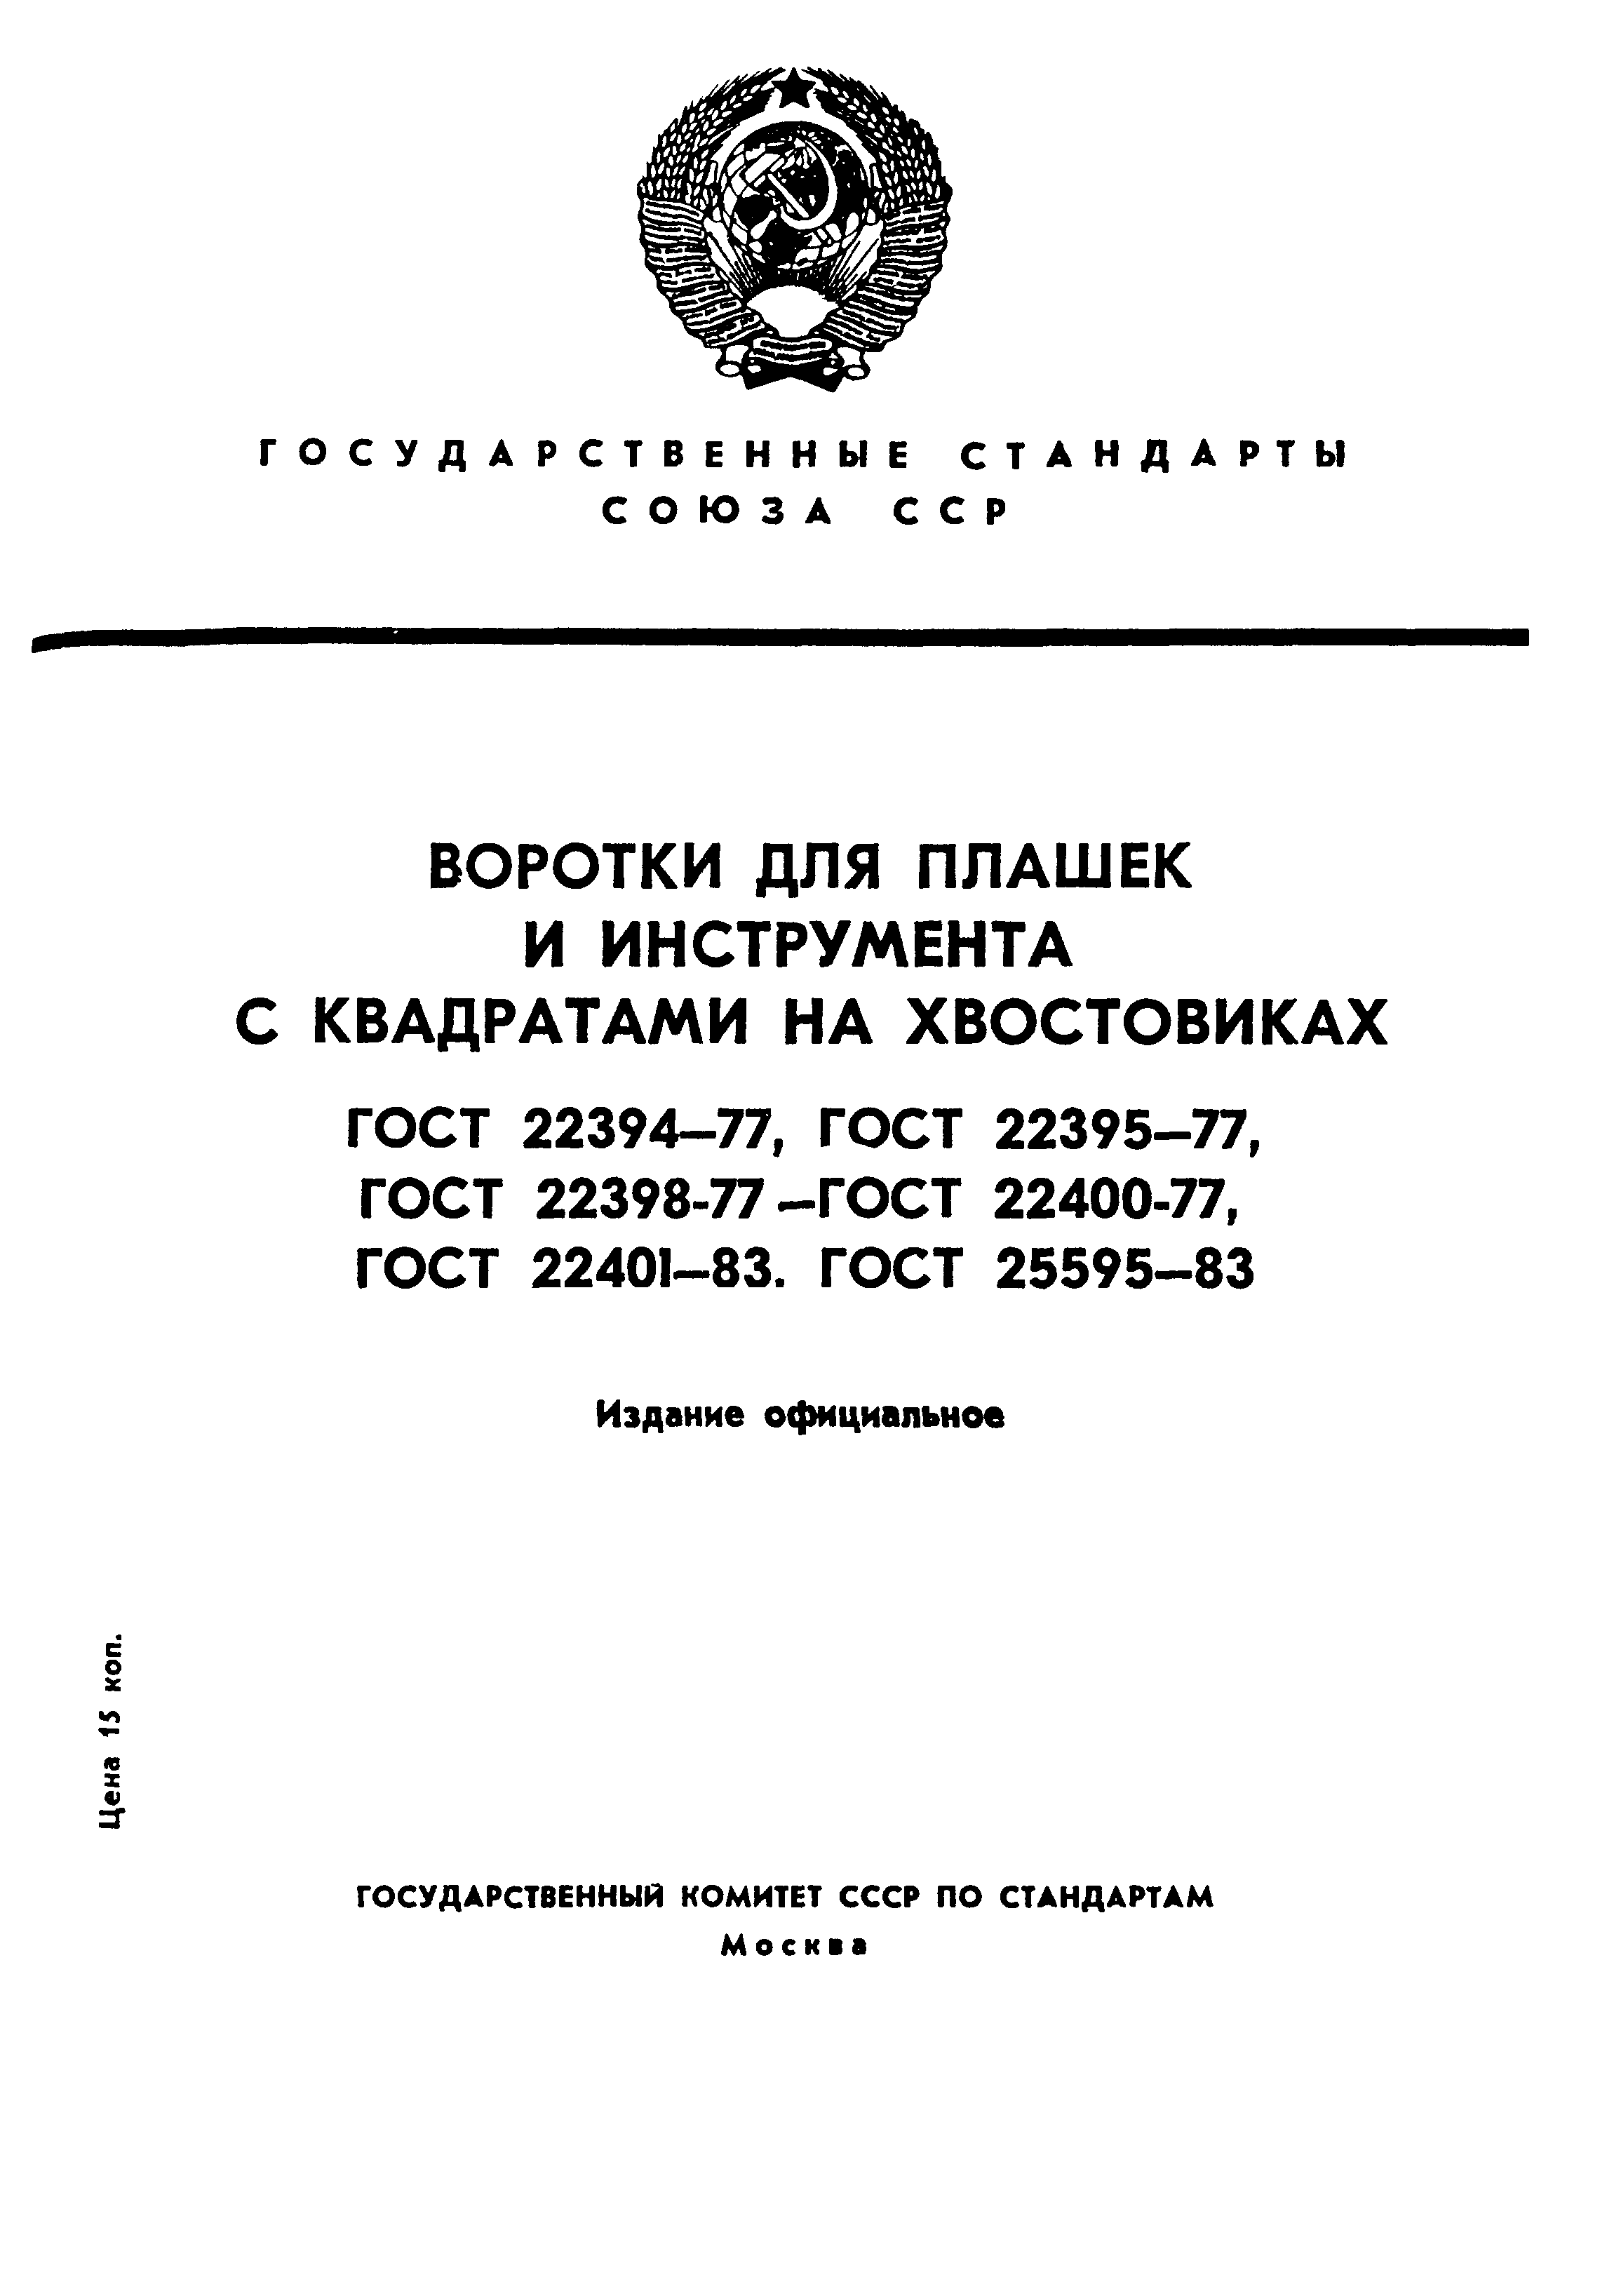 ГОСТ 22401-83